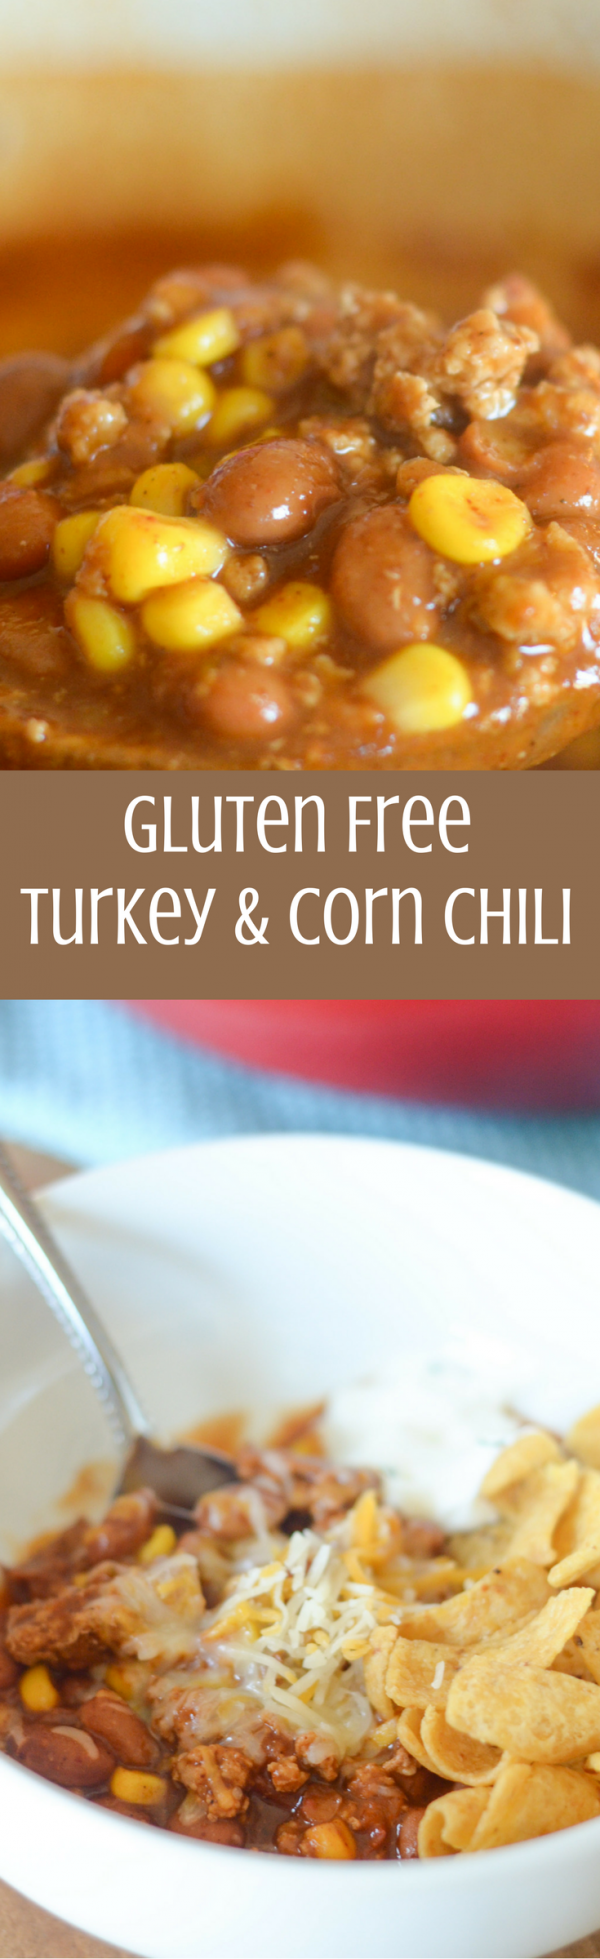 Gluten Free Turkey & Corn Chili